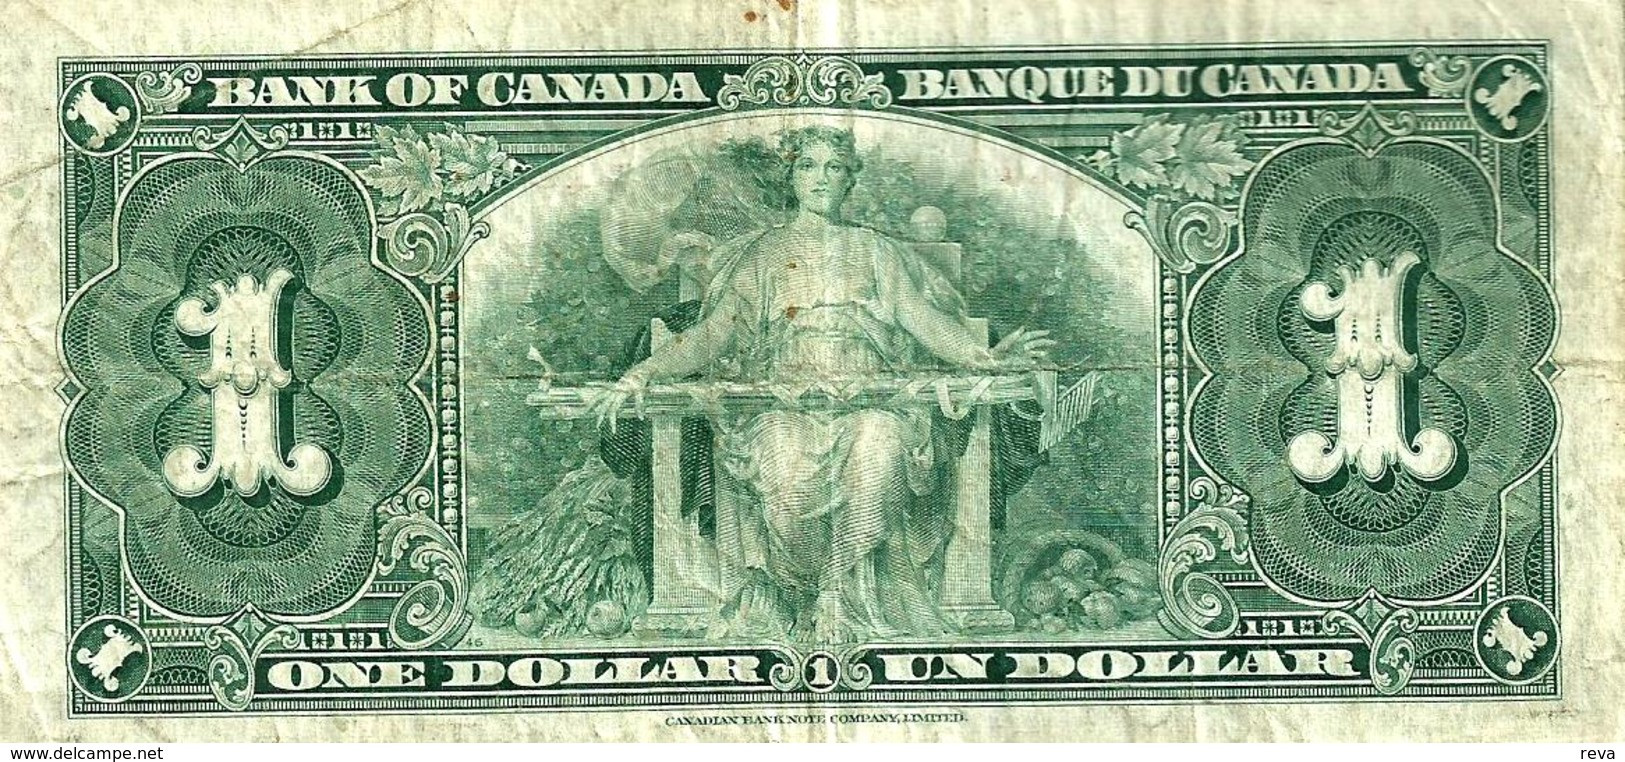 CANADA $1 DOLLAR KGVI HEAD FRONT WOMAN BACK DATED 2-1-1937 P58c SIGN. GORDON-TOWERS F+ READ DESCRIPTION - Canada